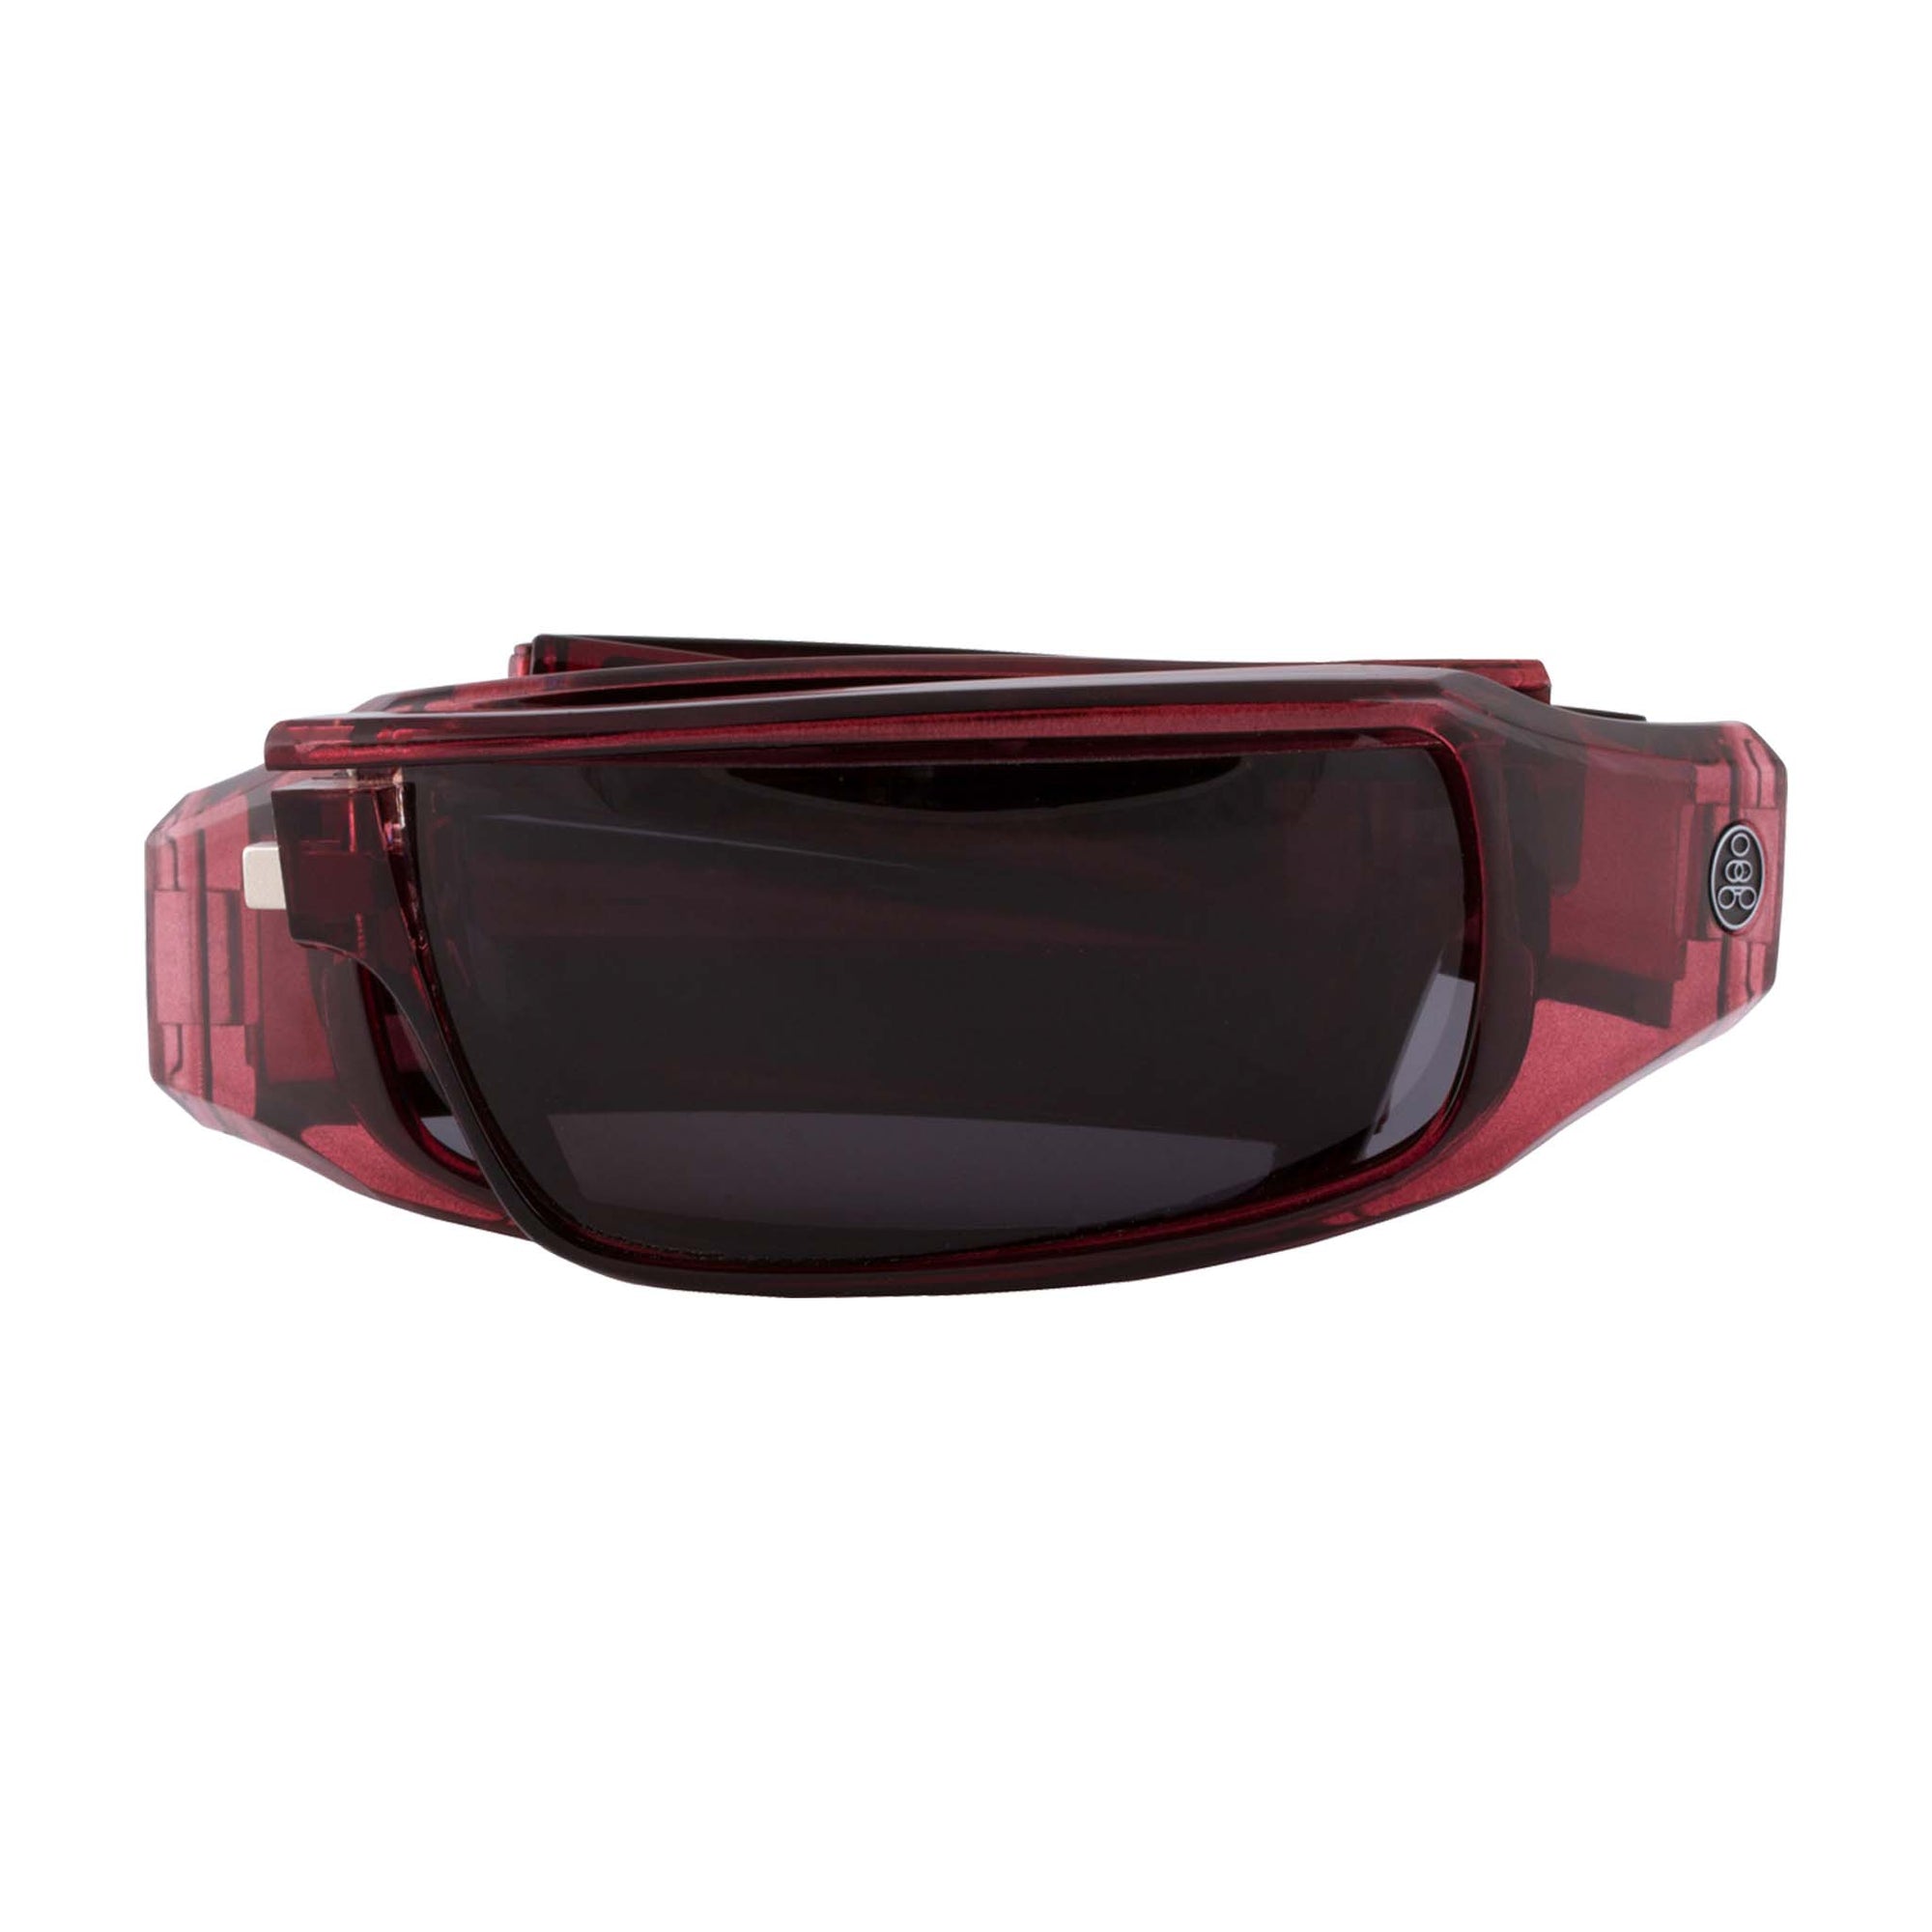 Popticals, Premium Compact Sunglasses, PopSign, 020020-WXGP, Polarized Sunglasses, Gloss Wine Crystal Frame, Gray Lenses, Compact View